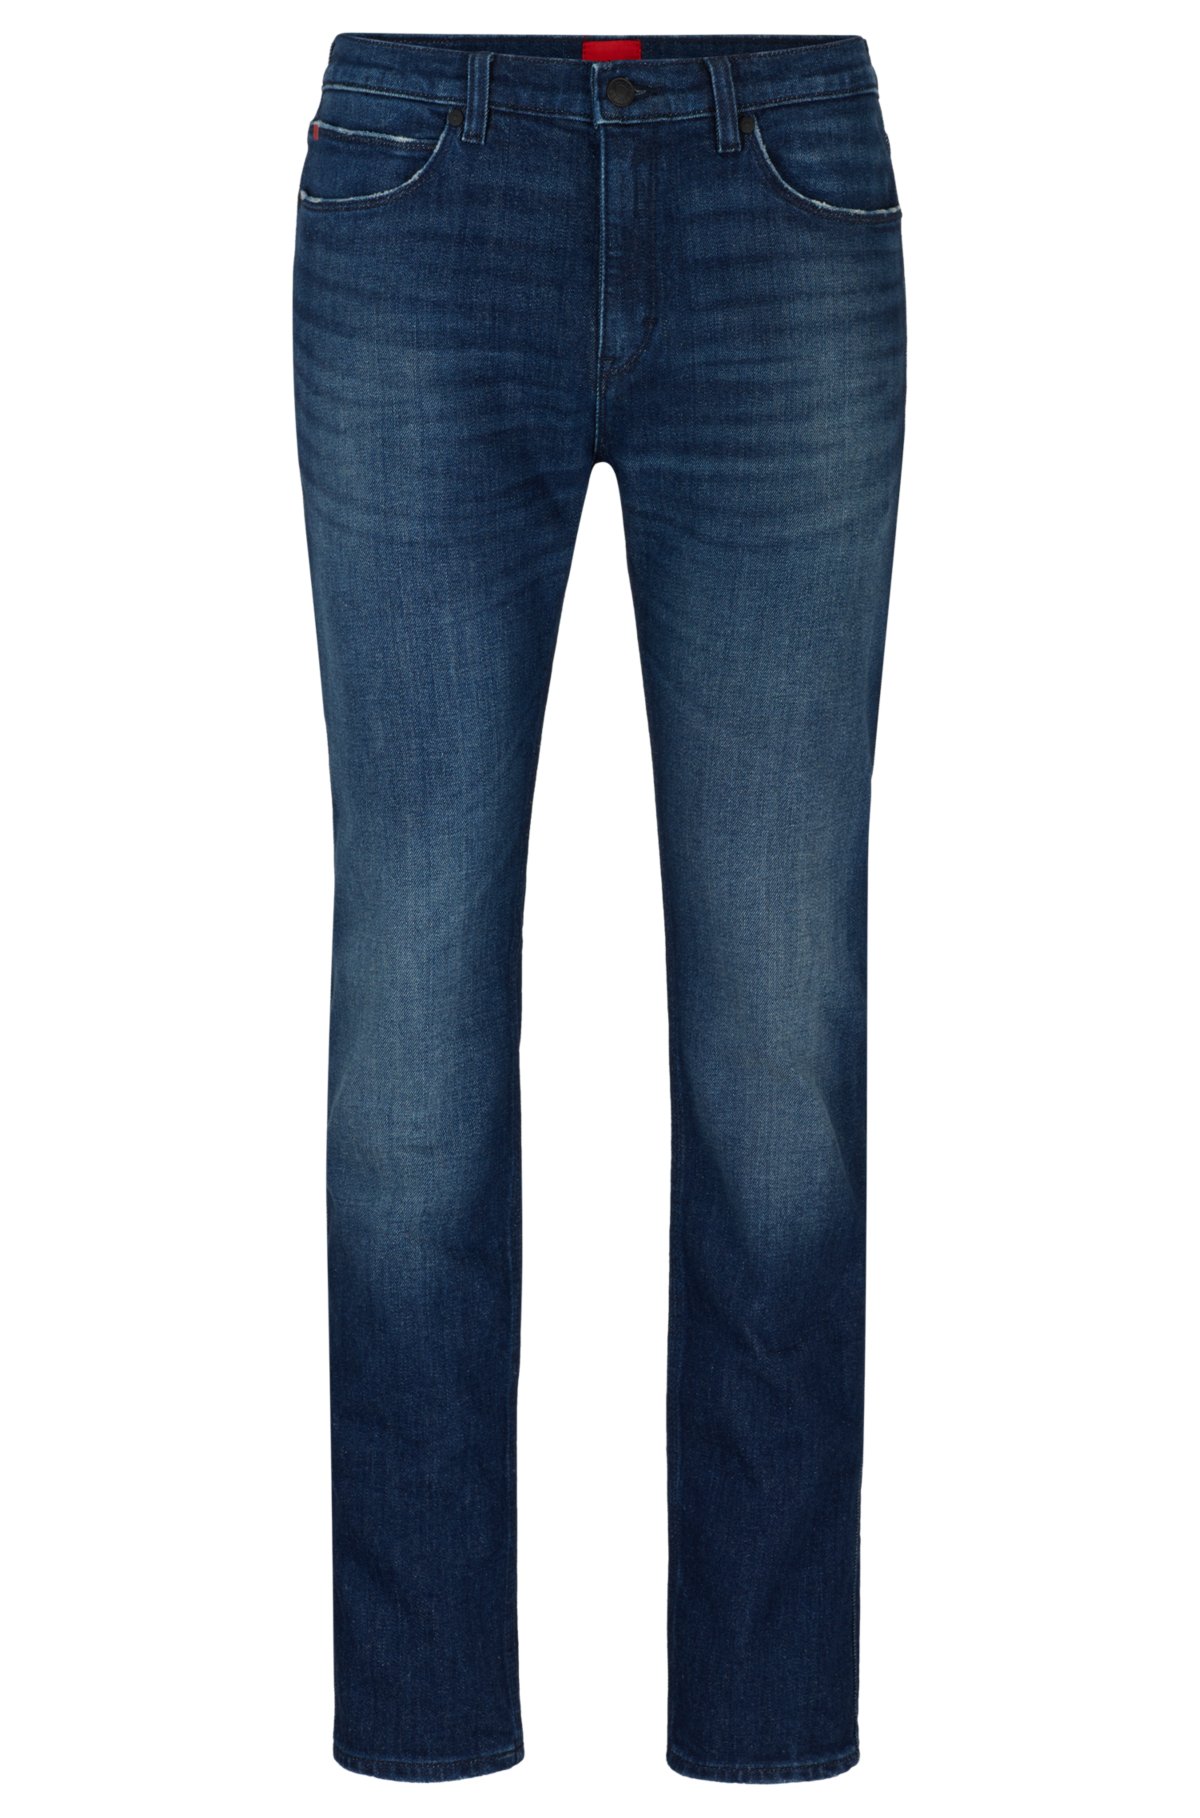 HUGO - Slim-fit jeans in blue stretch denim